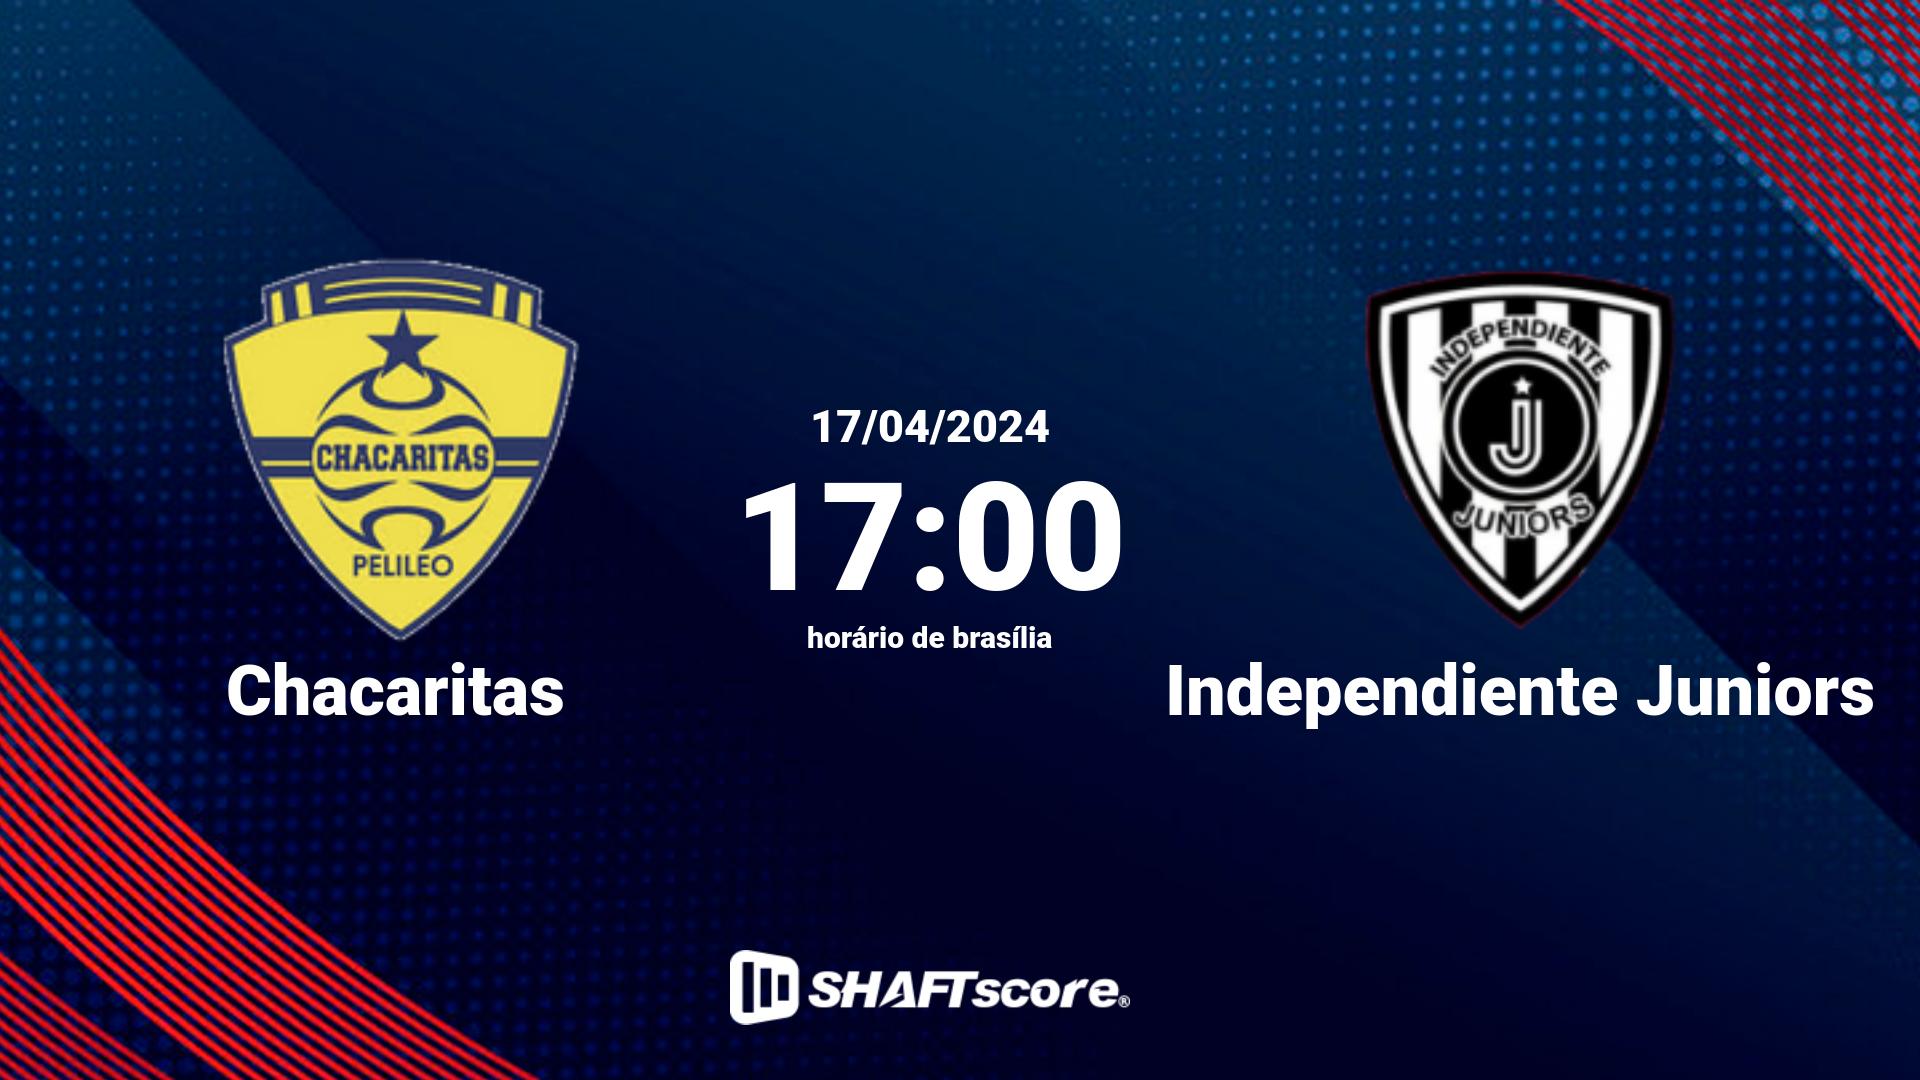 Estatísticas do jogo Chacaritas vs Independiente Juniors 17.04 17:00